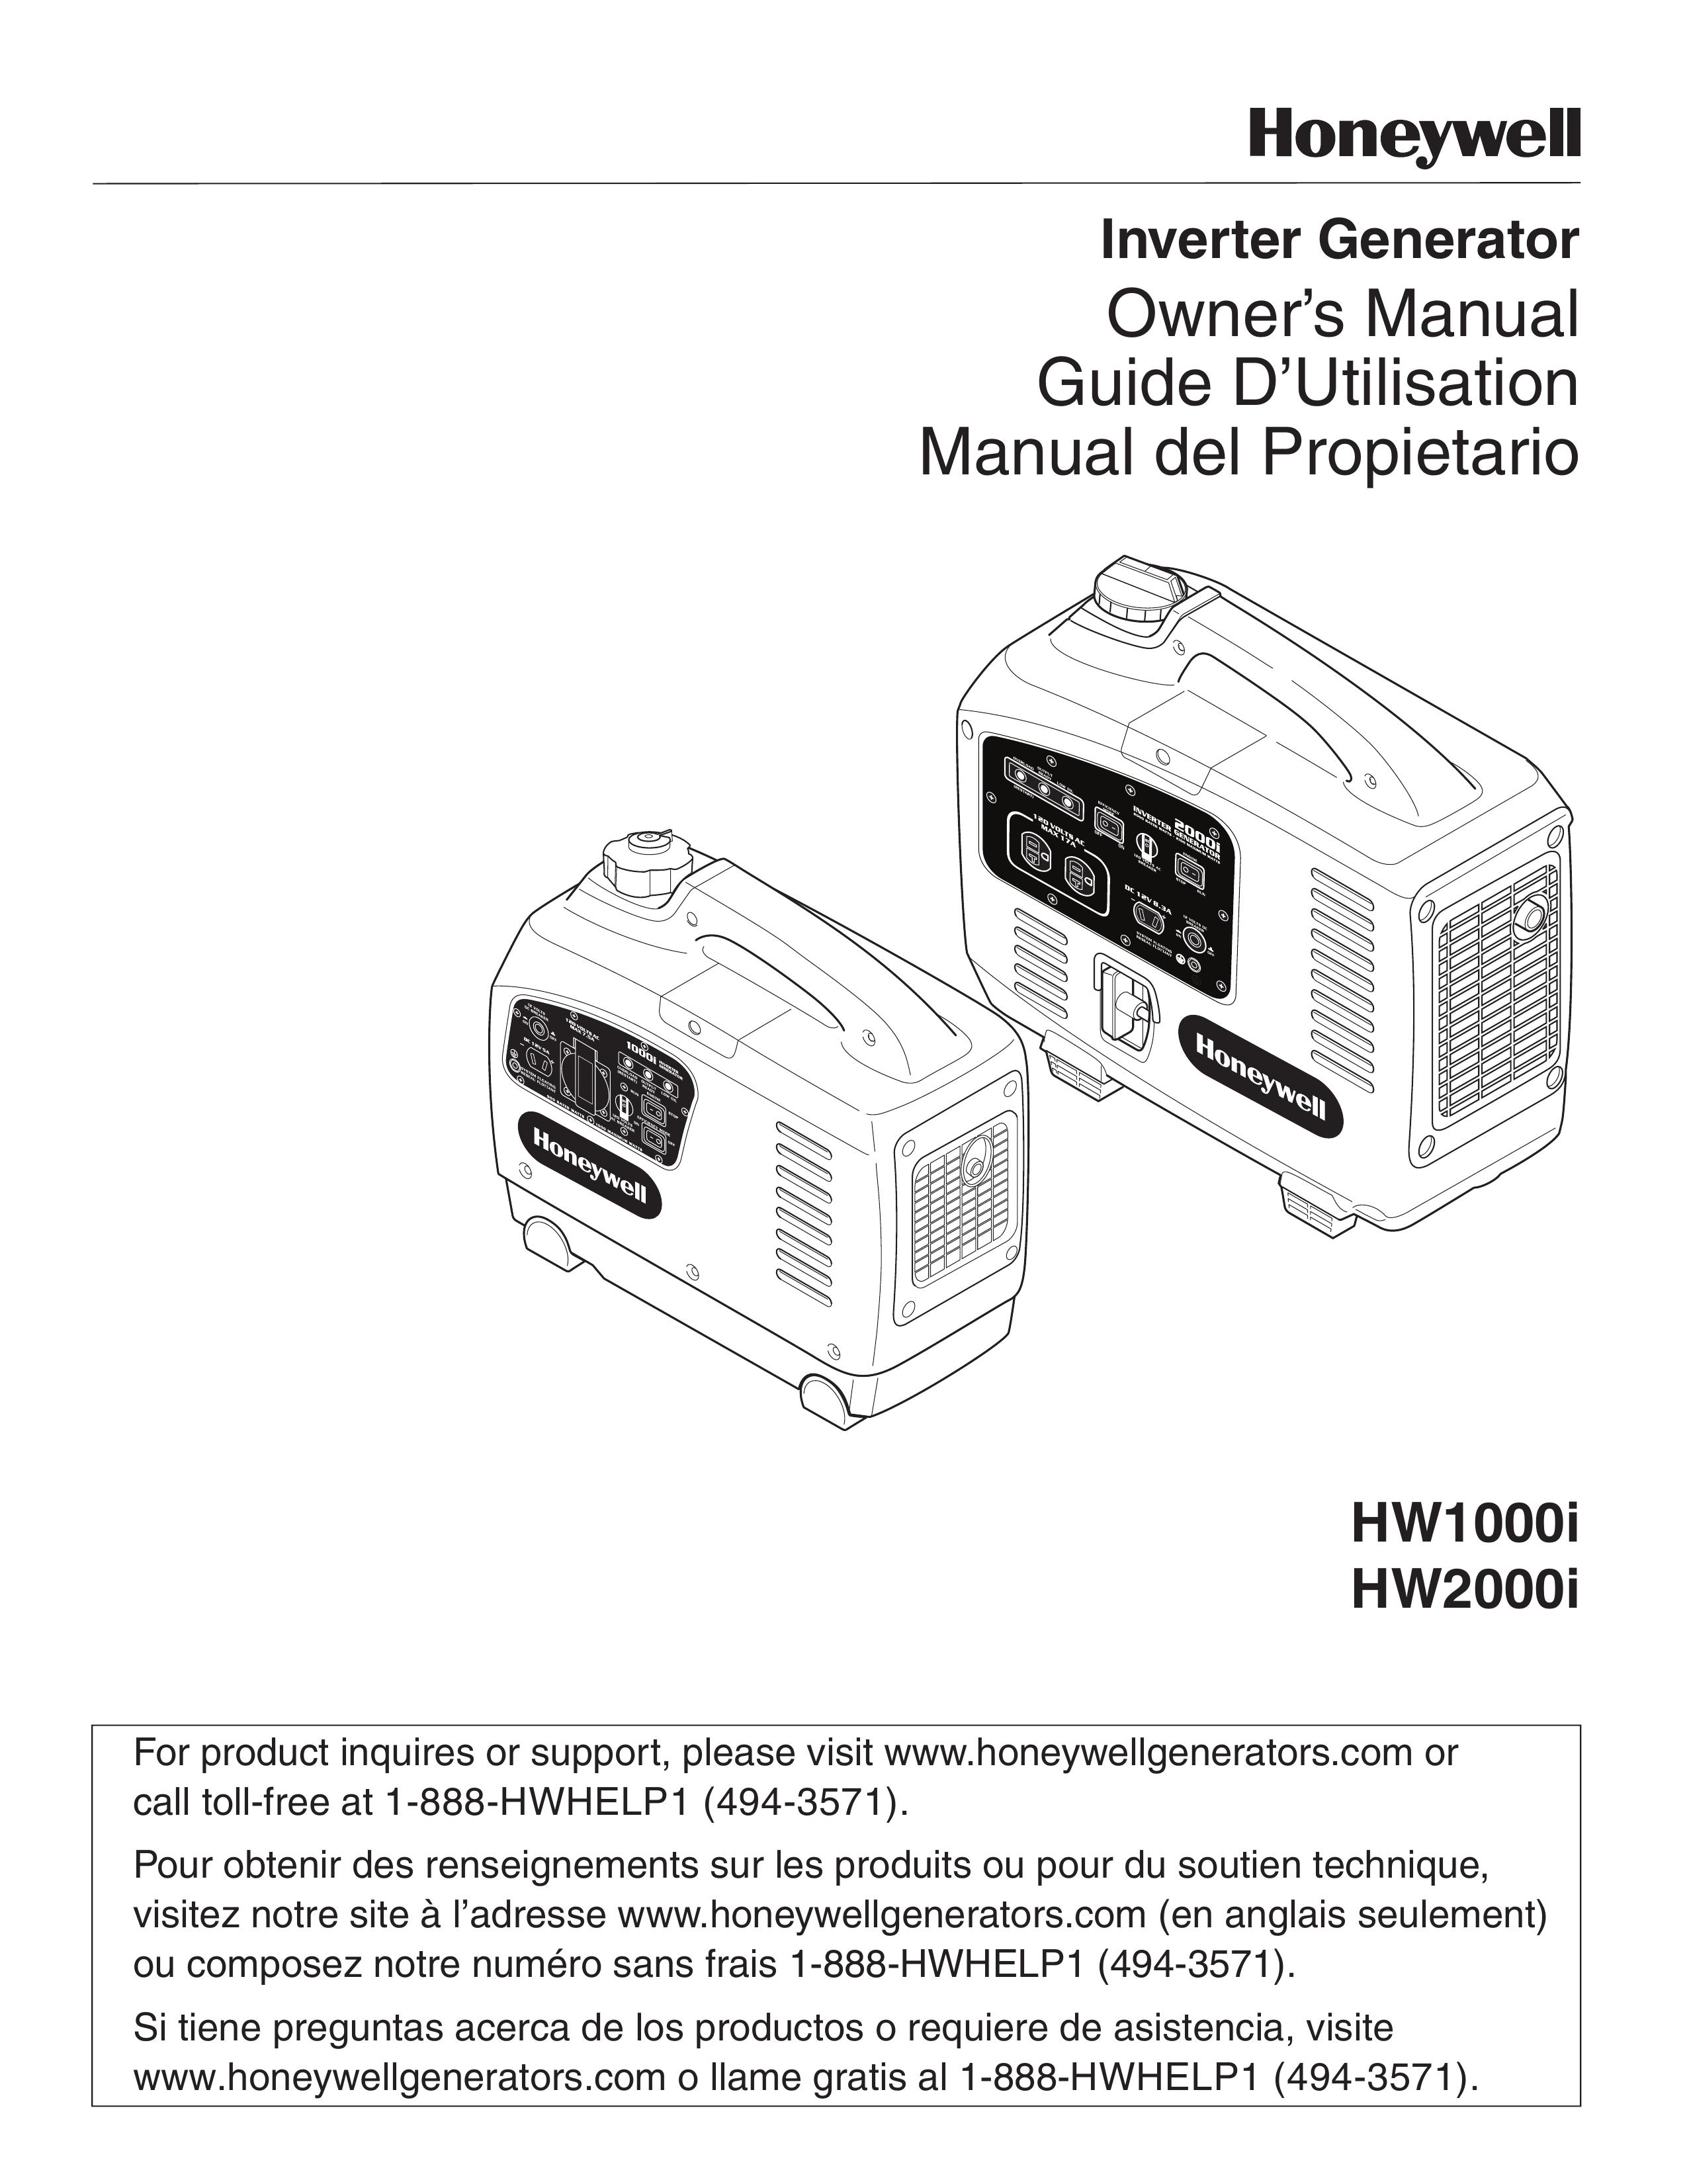 Honeywell HW2000i Portable Generator User Manual